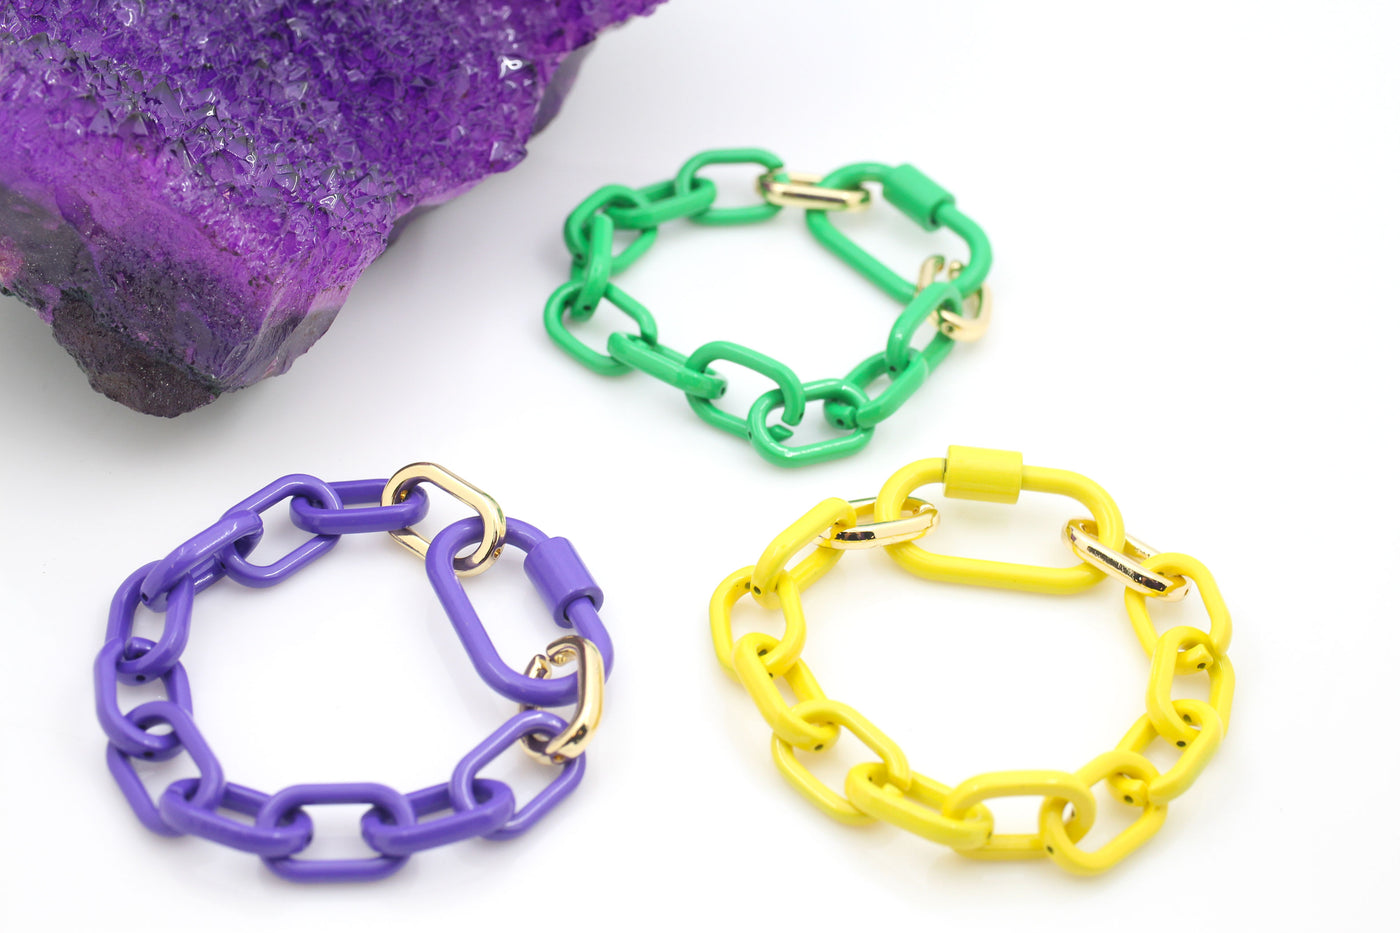 Mardi Gras Luxe Link Enamel Chain Bracelet with Carabiner Lock Clasp